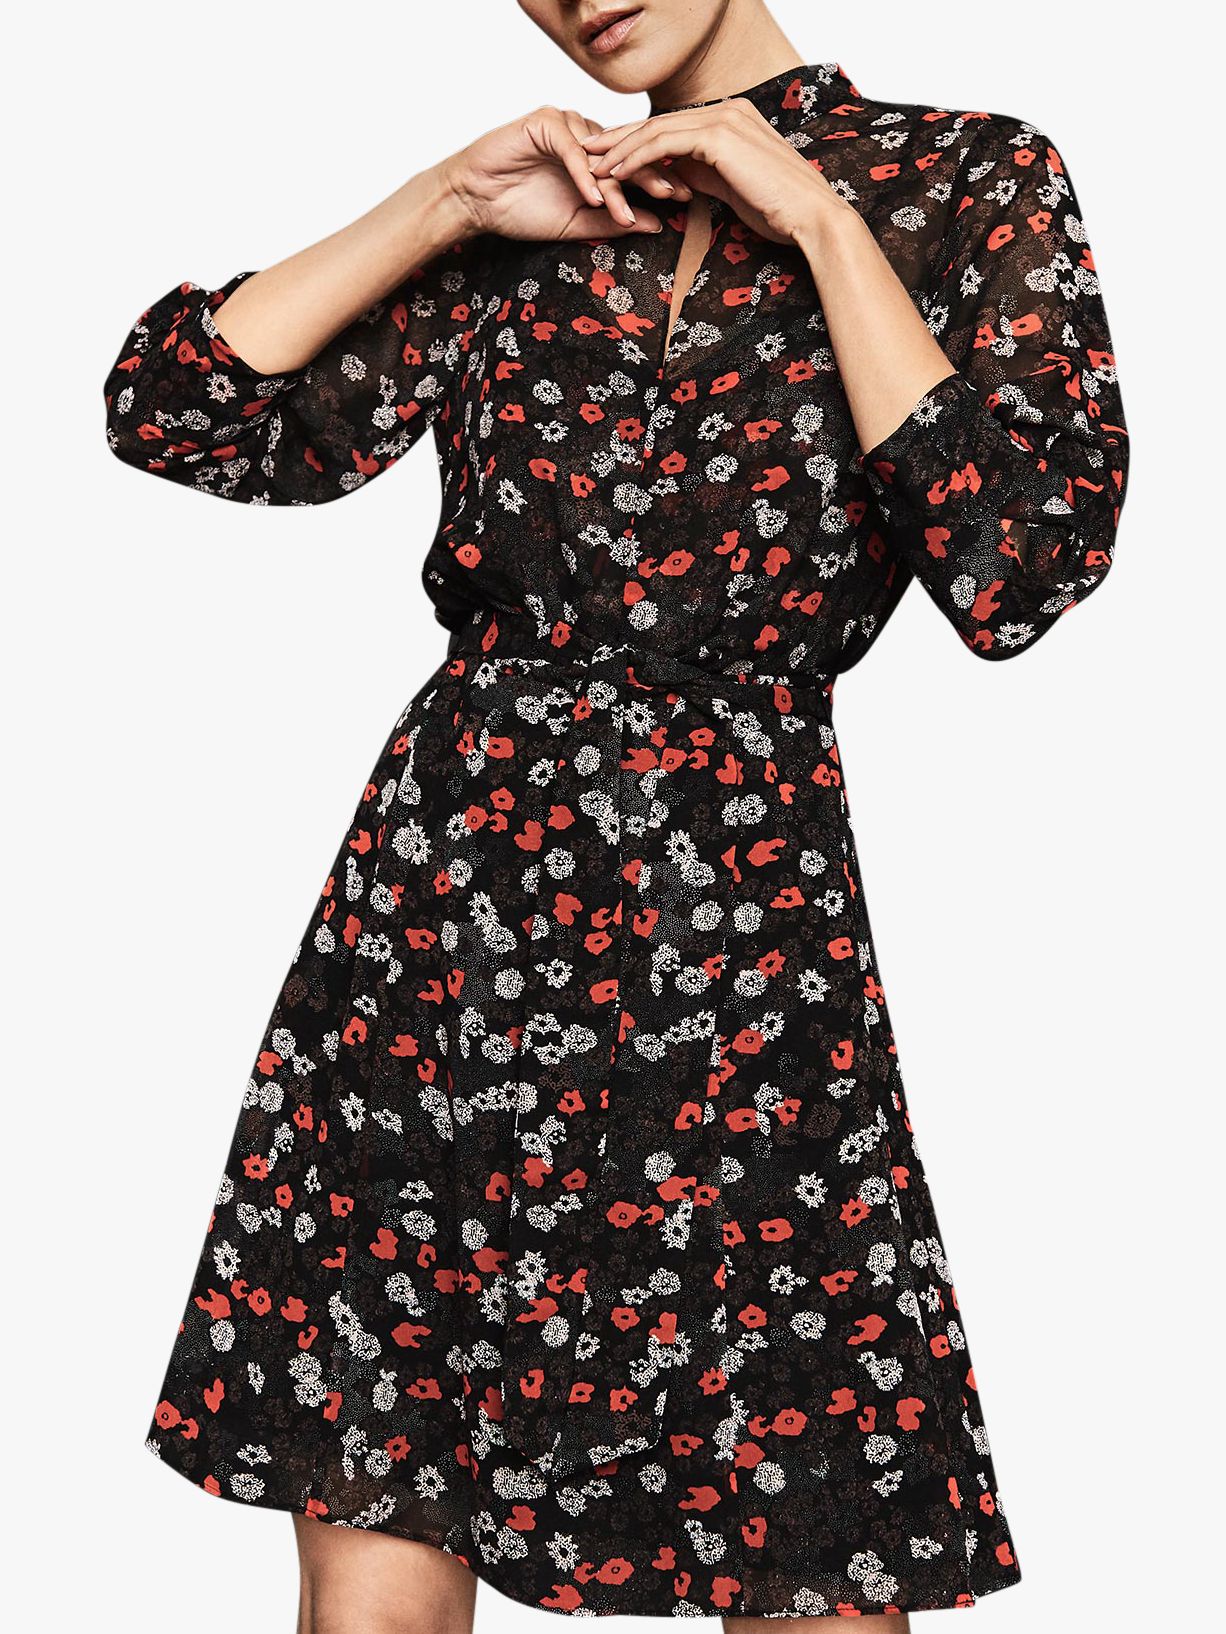 Reiss Peony Poppy Print Dress, Red/Black